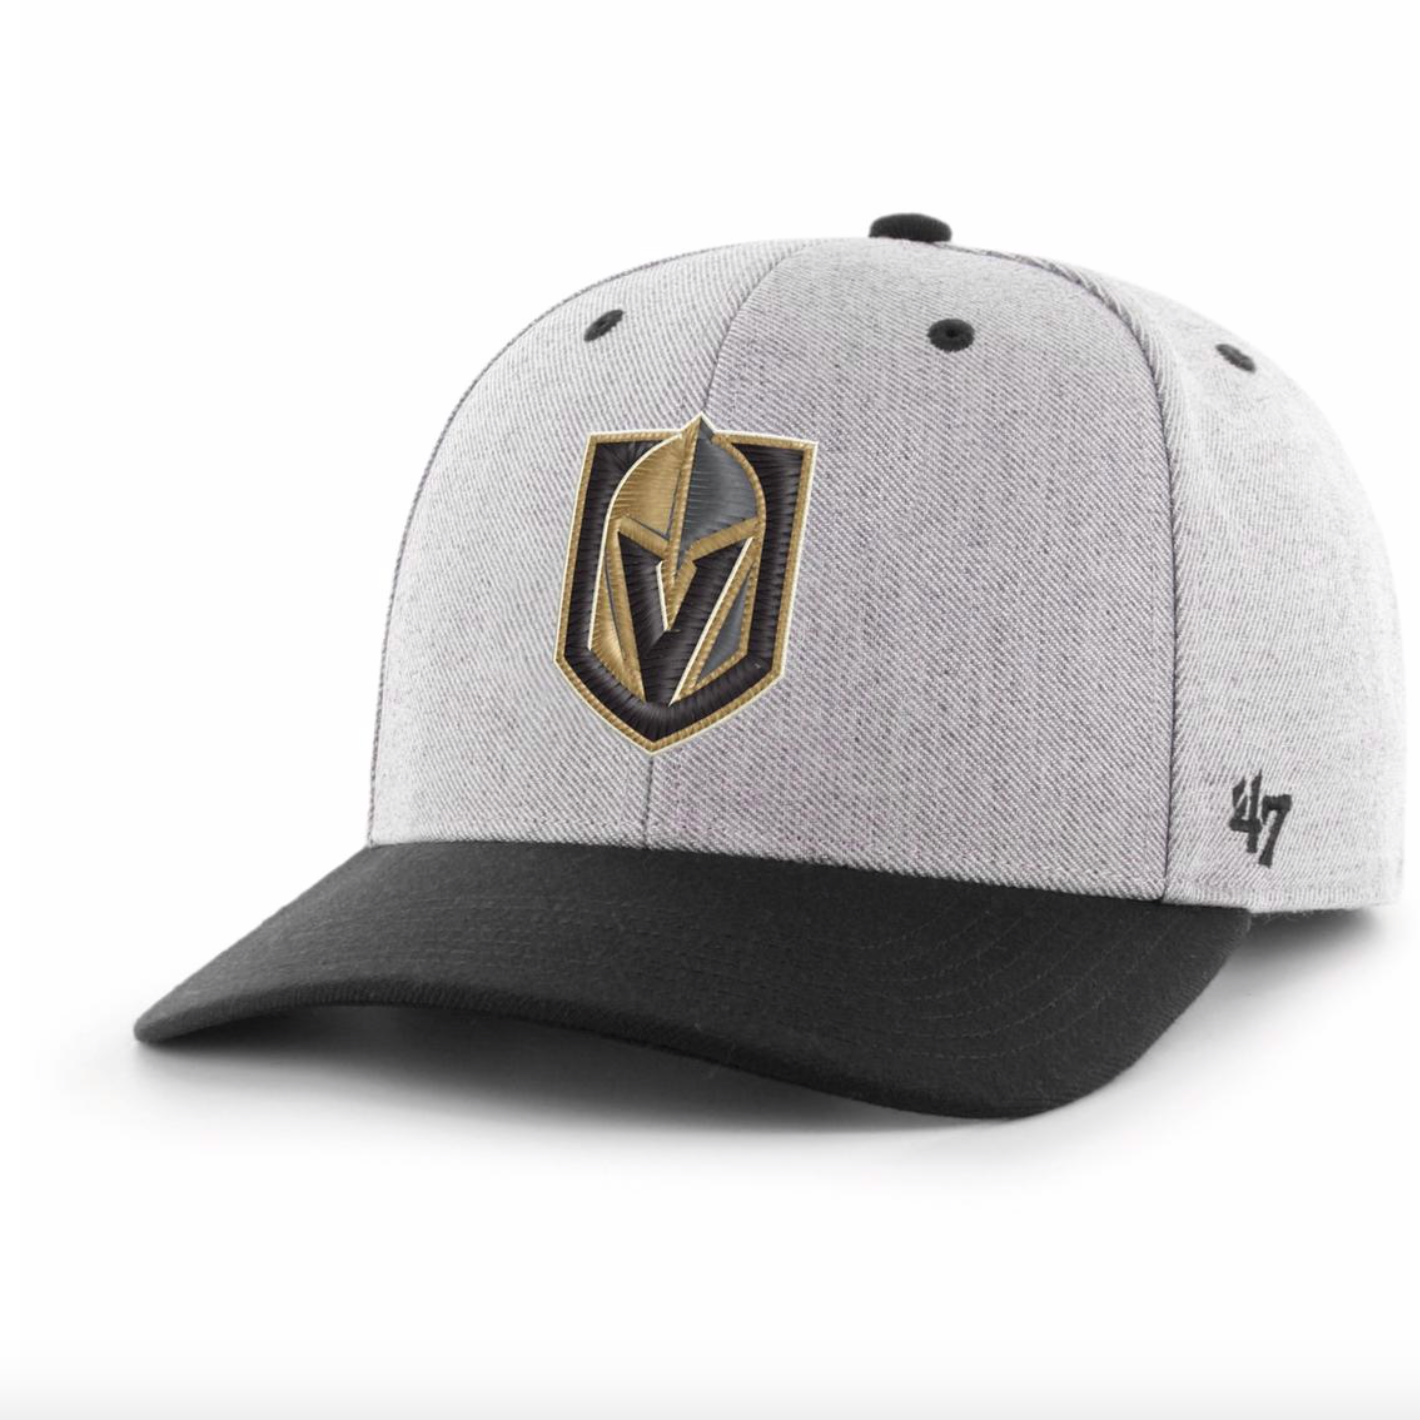 '47 Brand - NHL Vegas Golden Knights - Adjustable Grey / Black Cap